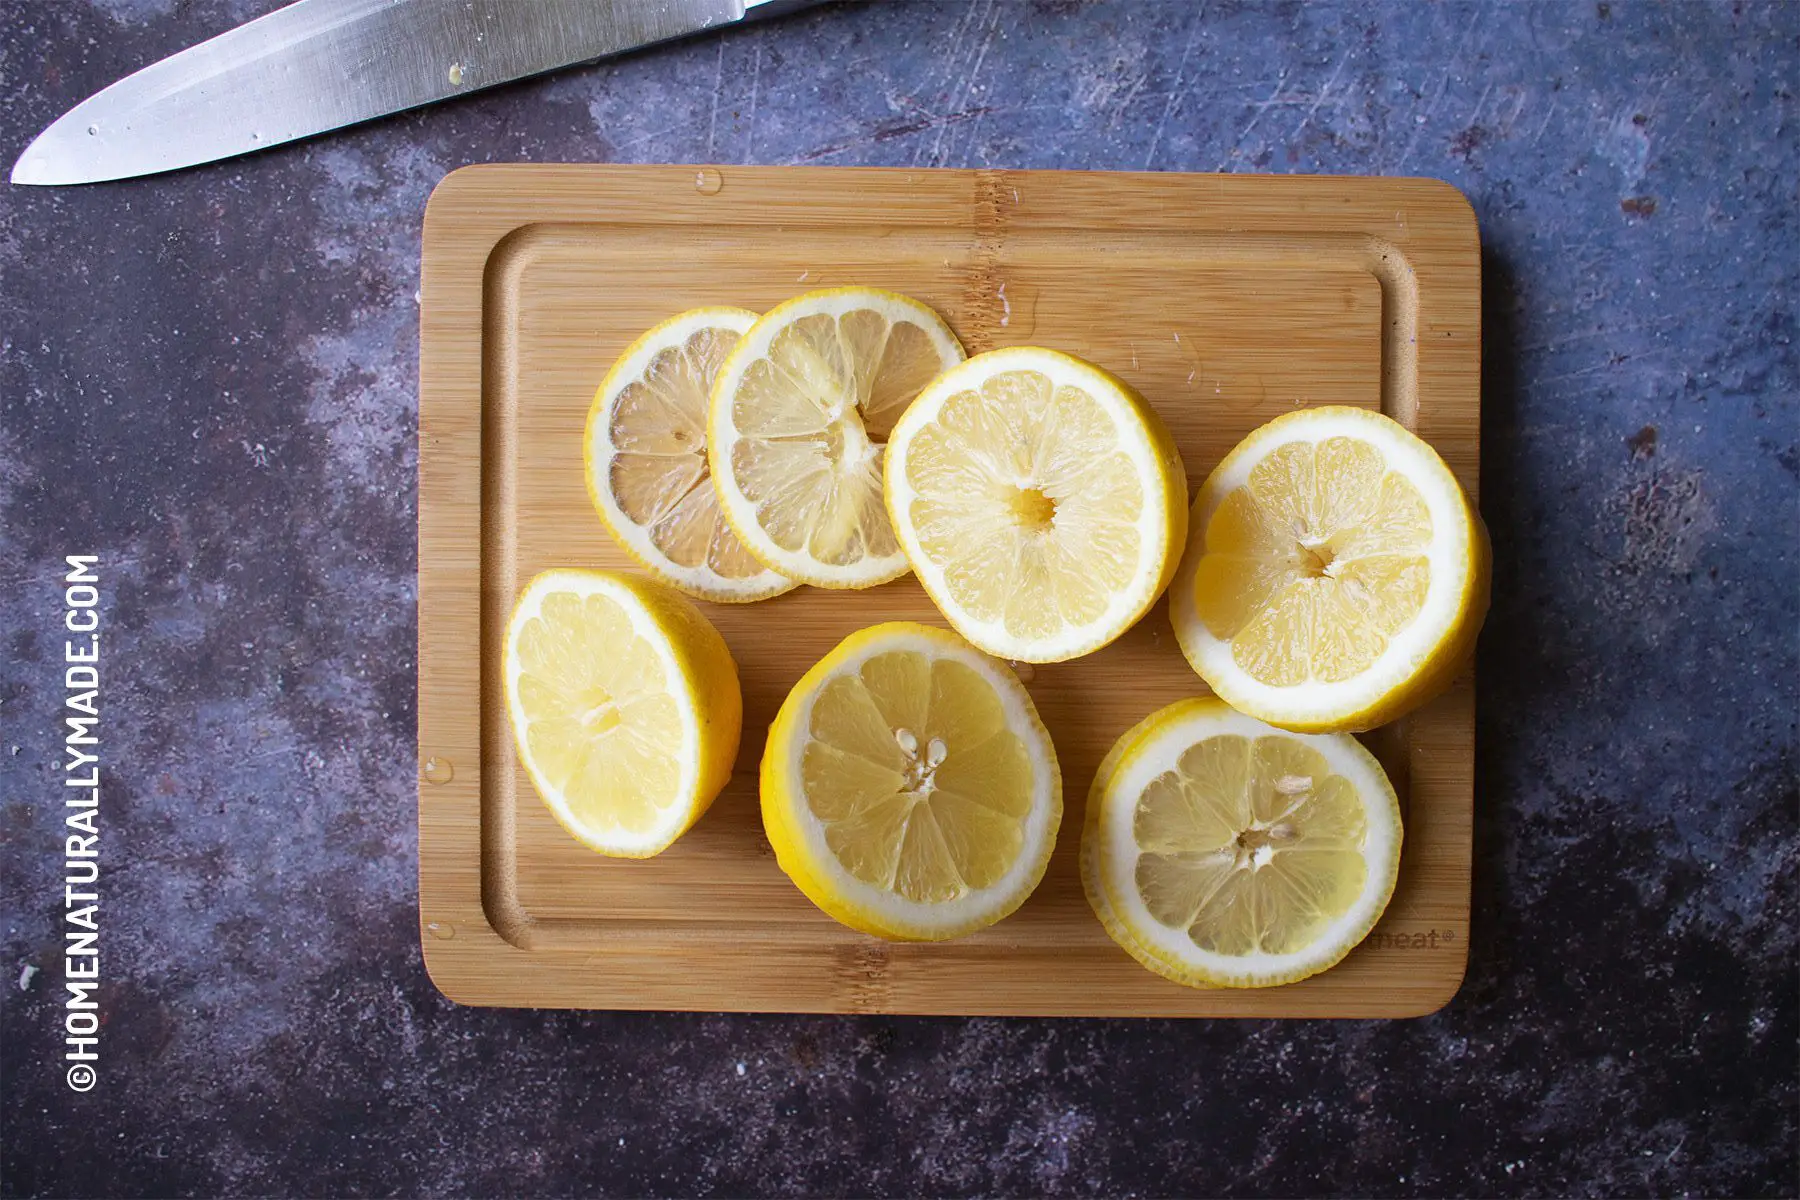 cut lemon into halves and slice a few thin slices off each half